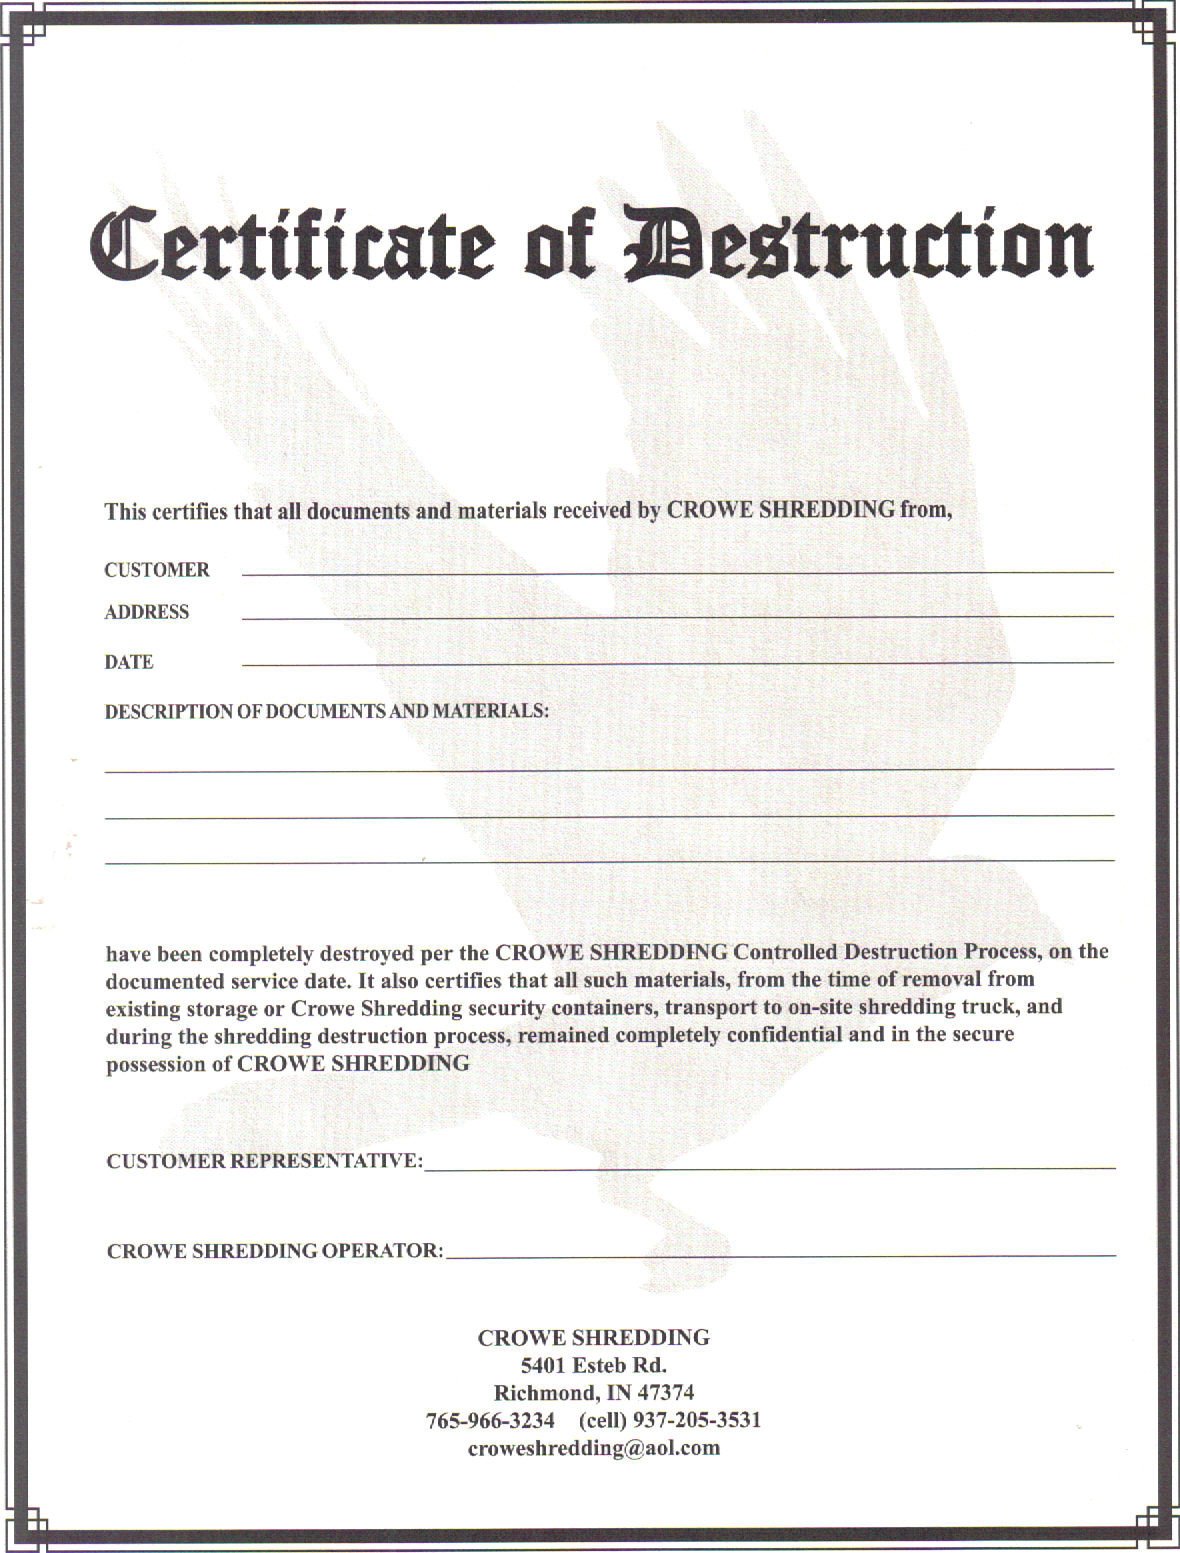 Certificate of Destruction 2011 Crowe Shredding